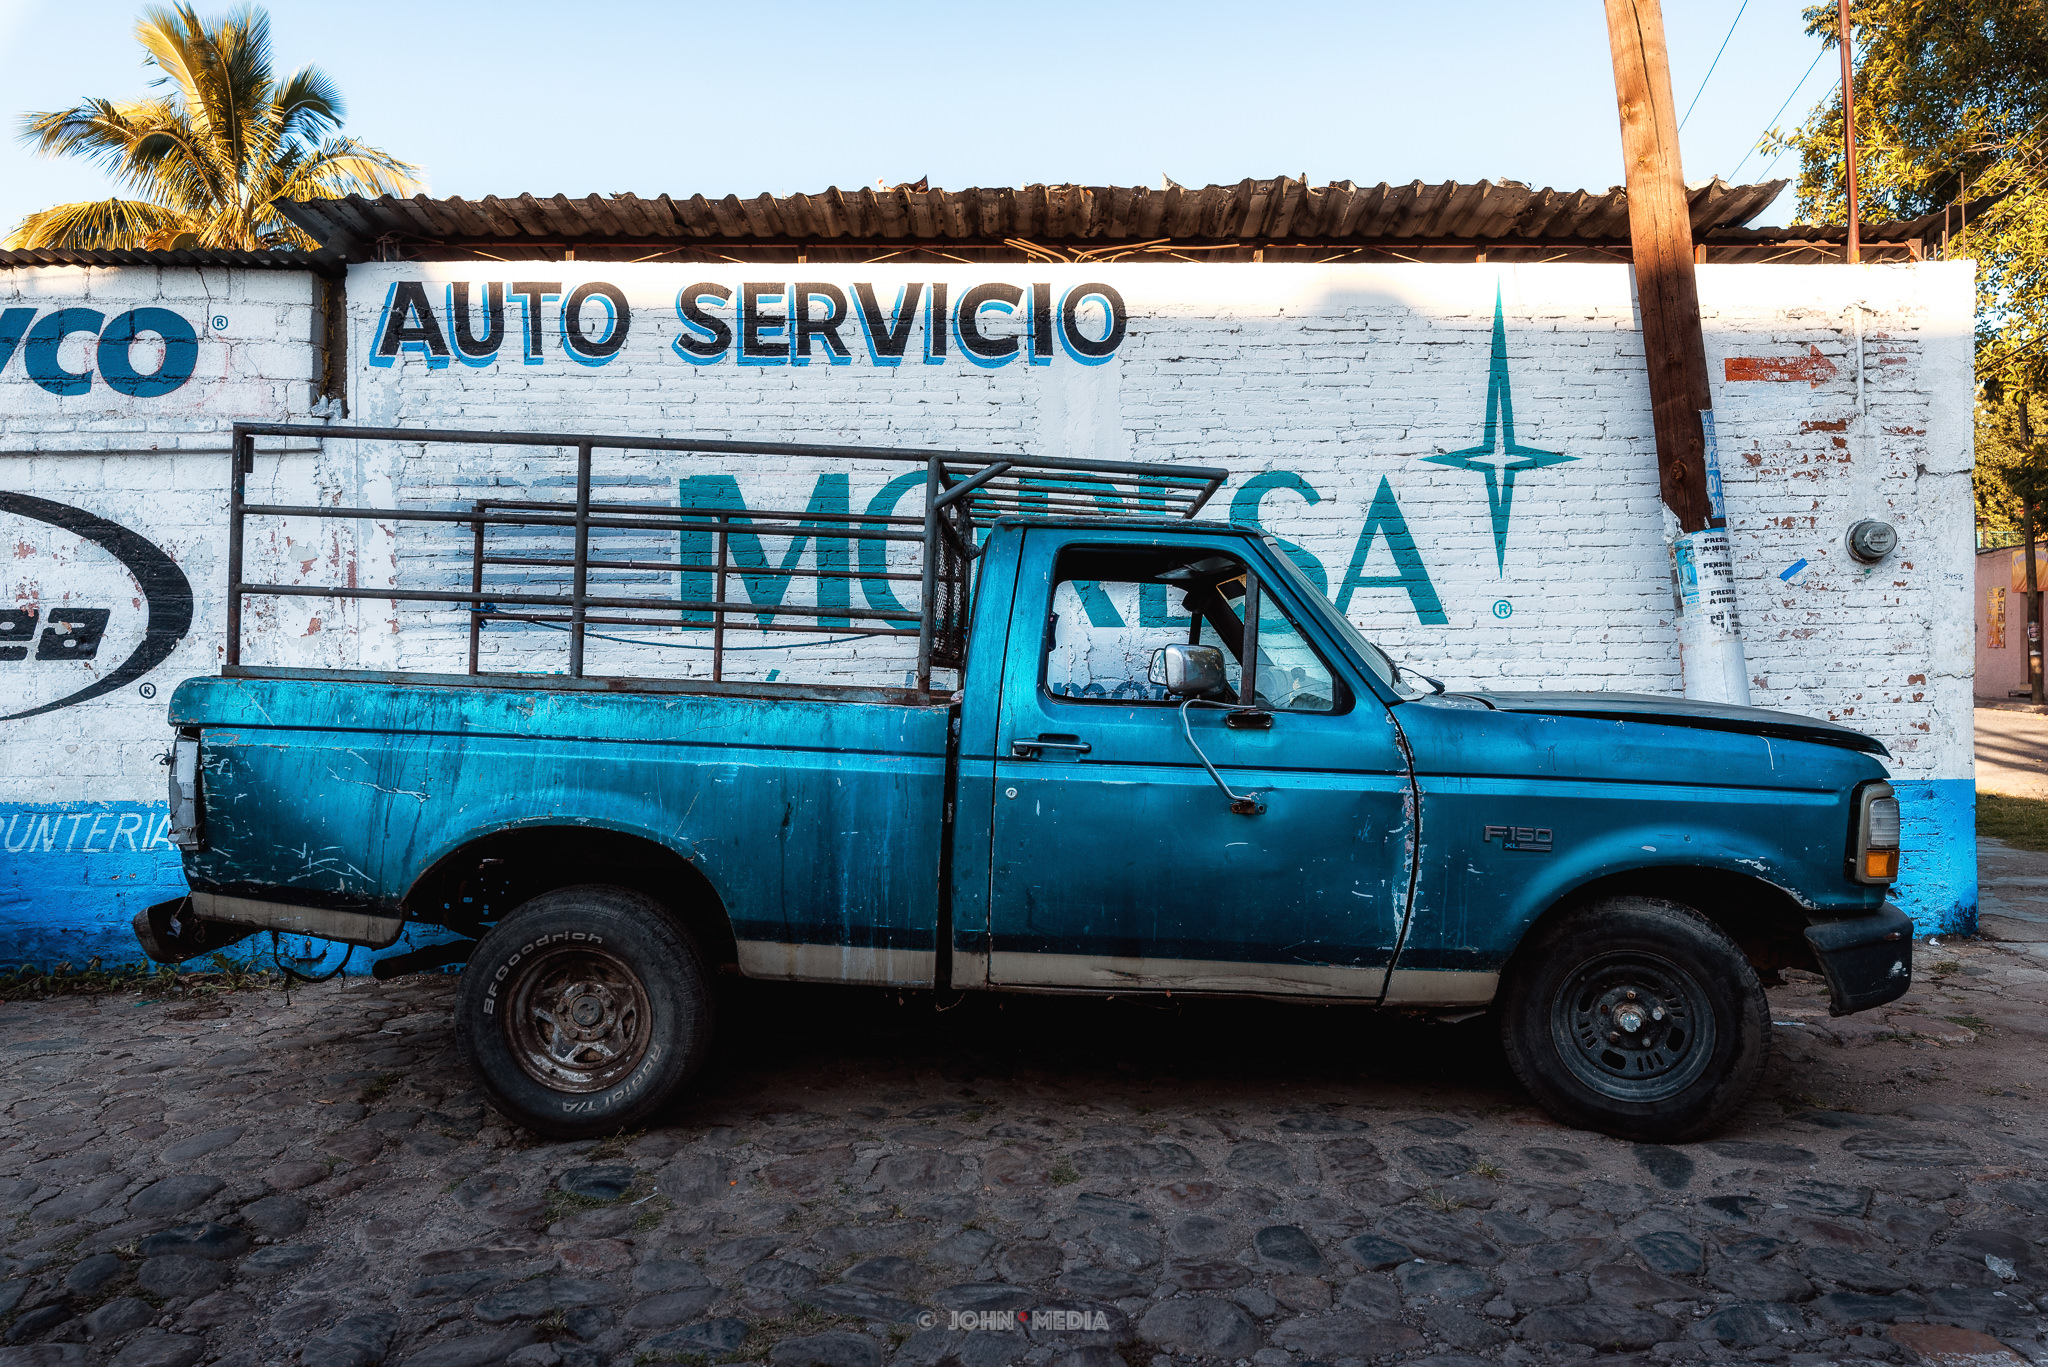 Oaxaca Turquoise Truck